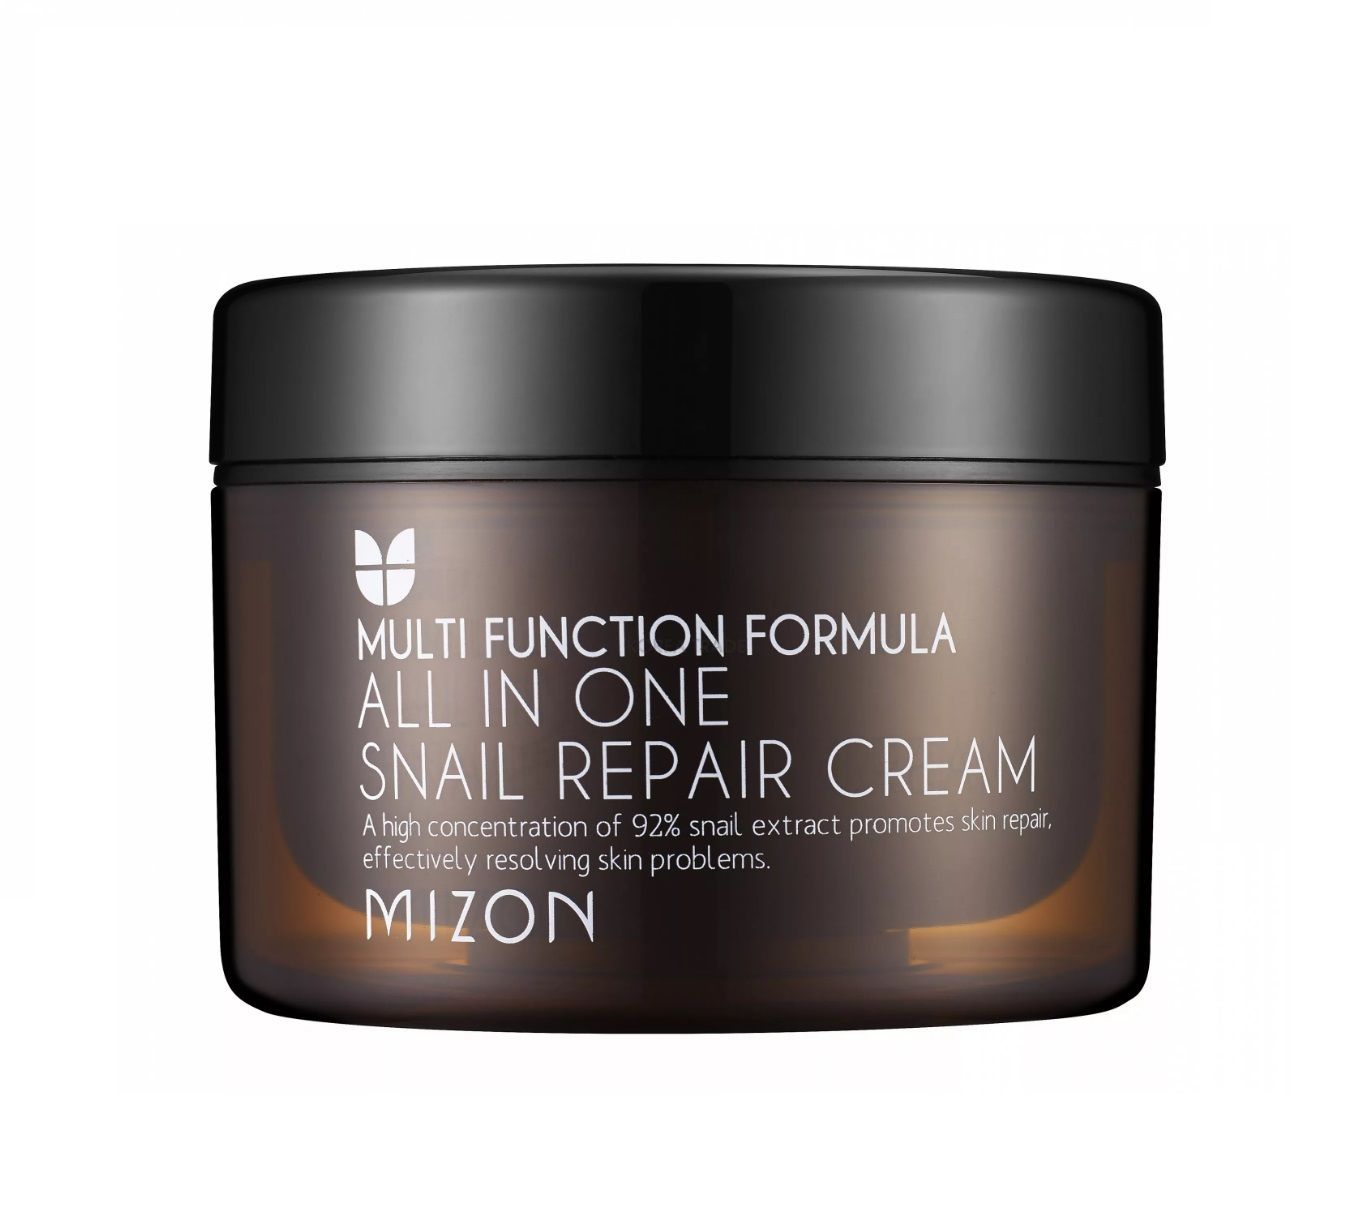 Mizon улитка. Mizon all in one Snail Repair Cream 75ml. Mizon крем крем Mizon all in one Snail Repair Cream. 92% All in one Snail Repair Cream. Mizon all in one Snail Repair Cream, 75 мл.